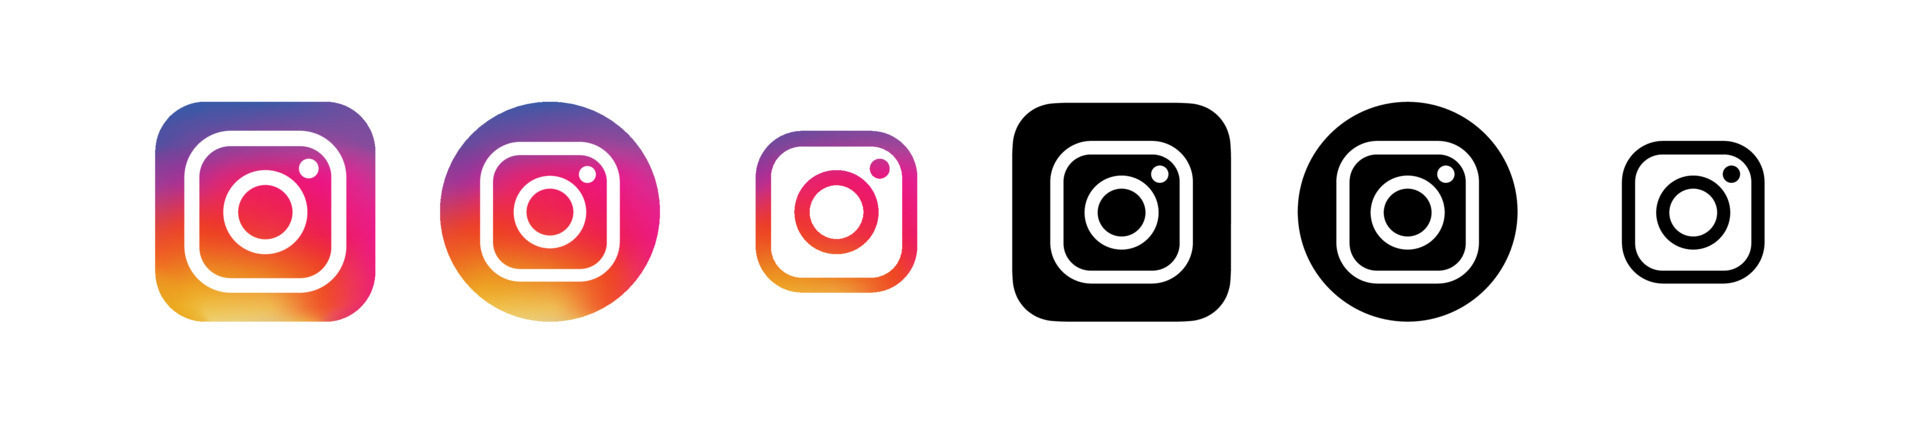 Instagram mobile app logo, Instagram app icon, Ig app free vector ...